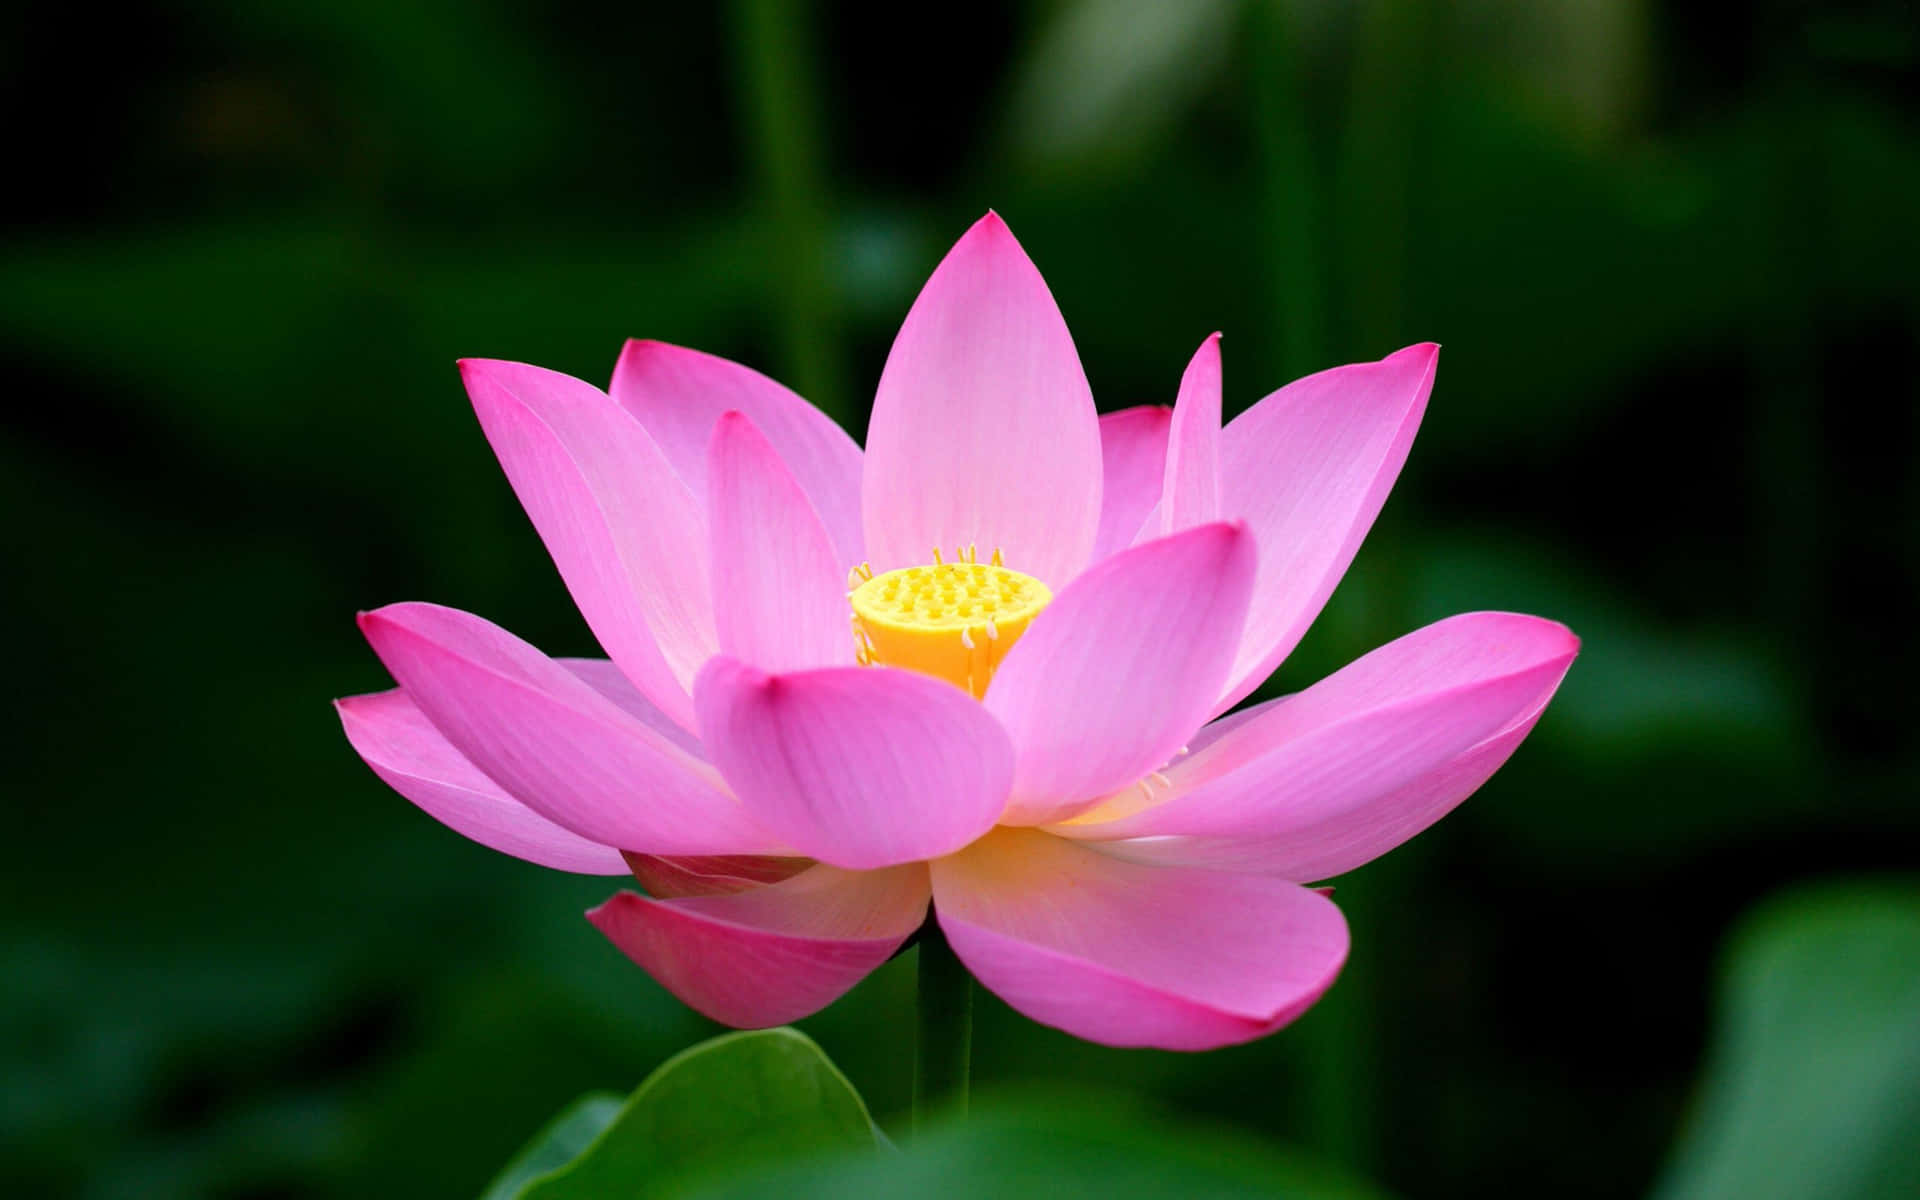 A beautiful lotus blooming among a lake of lilies